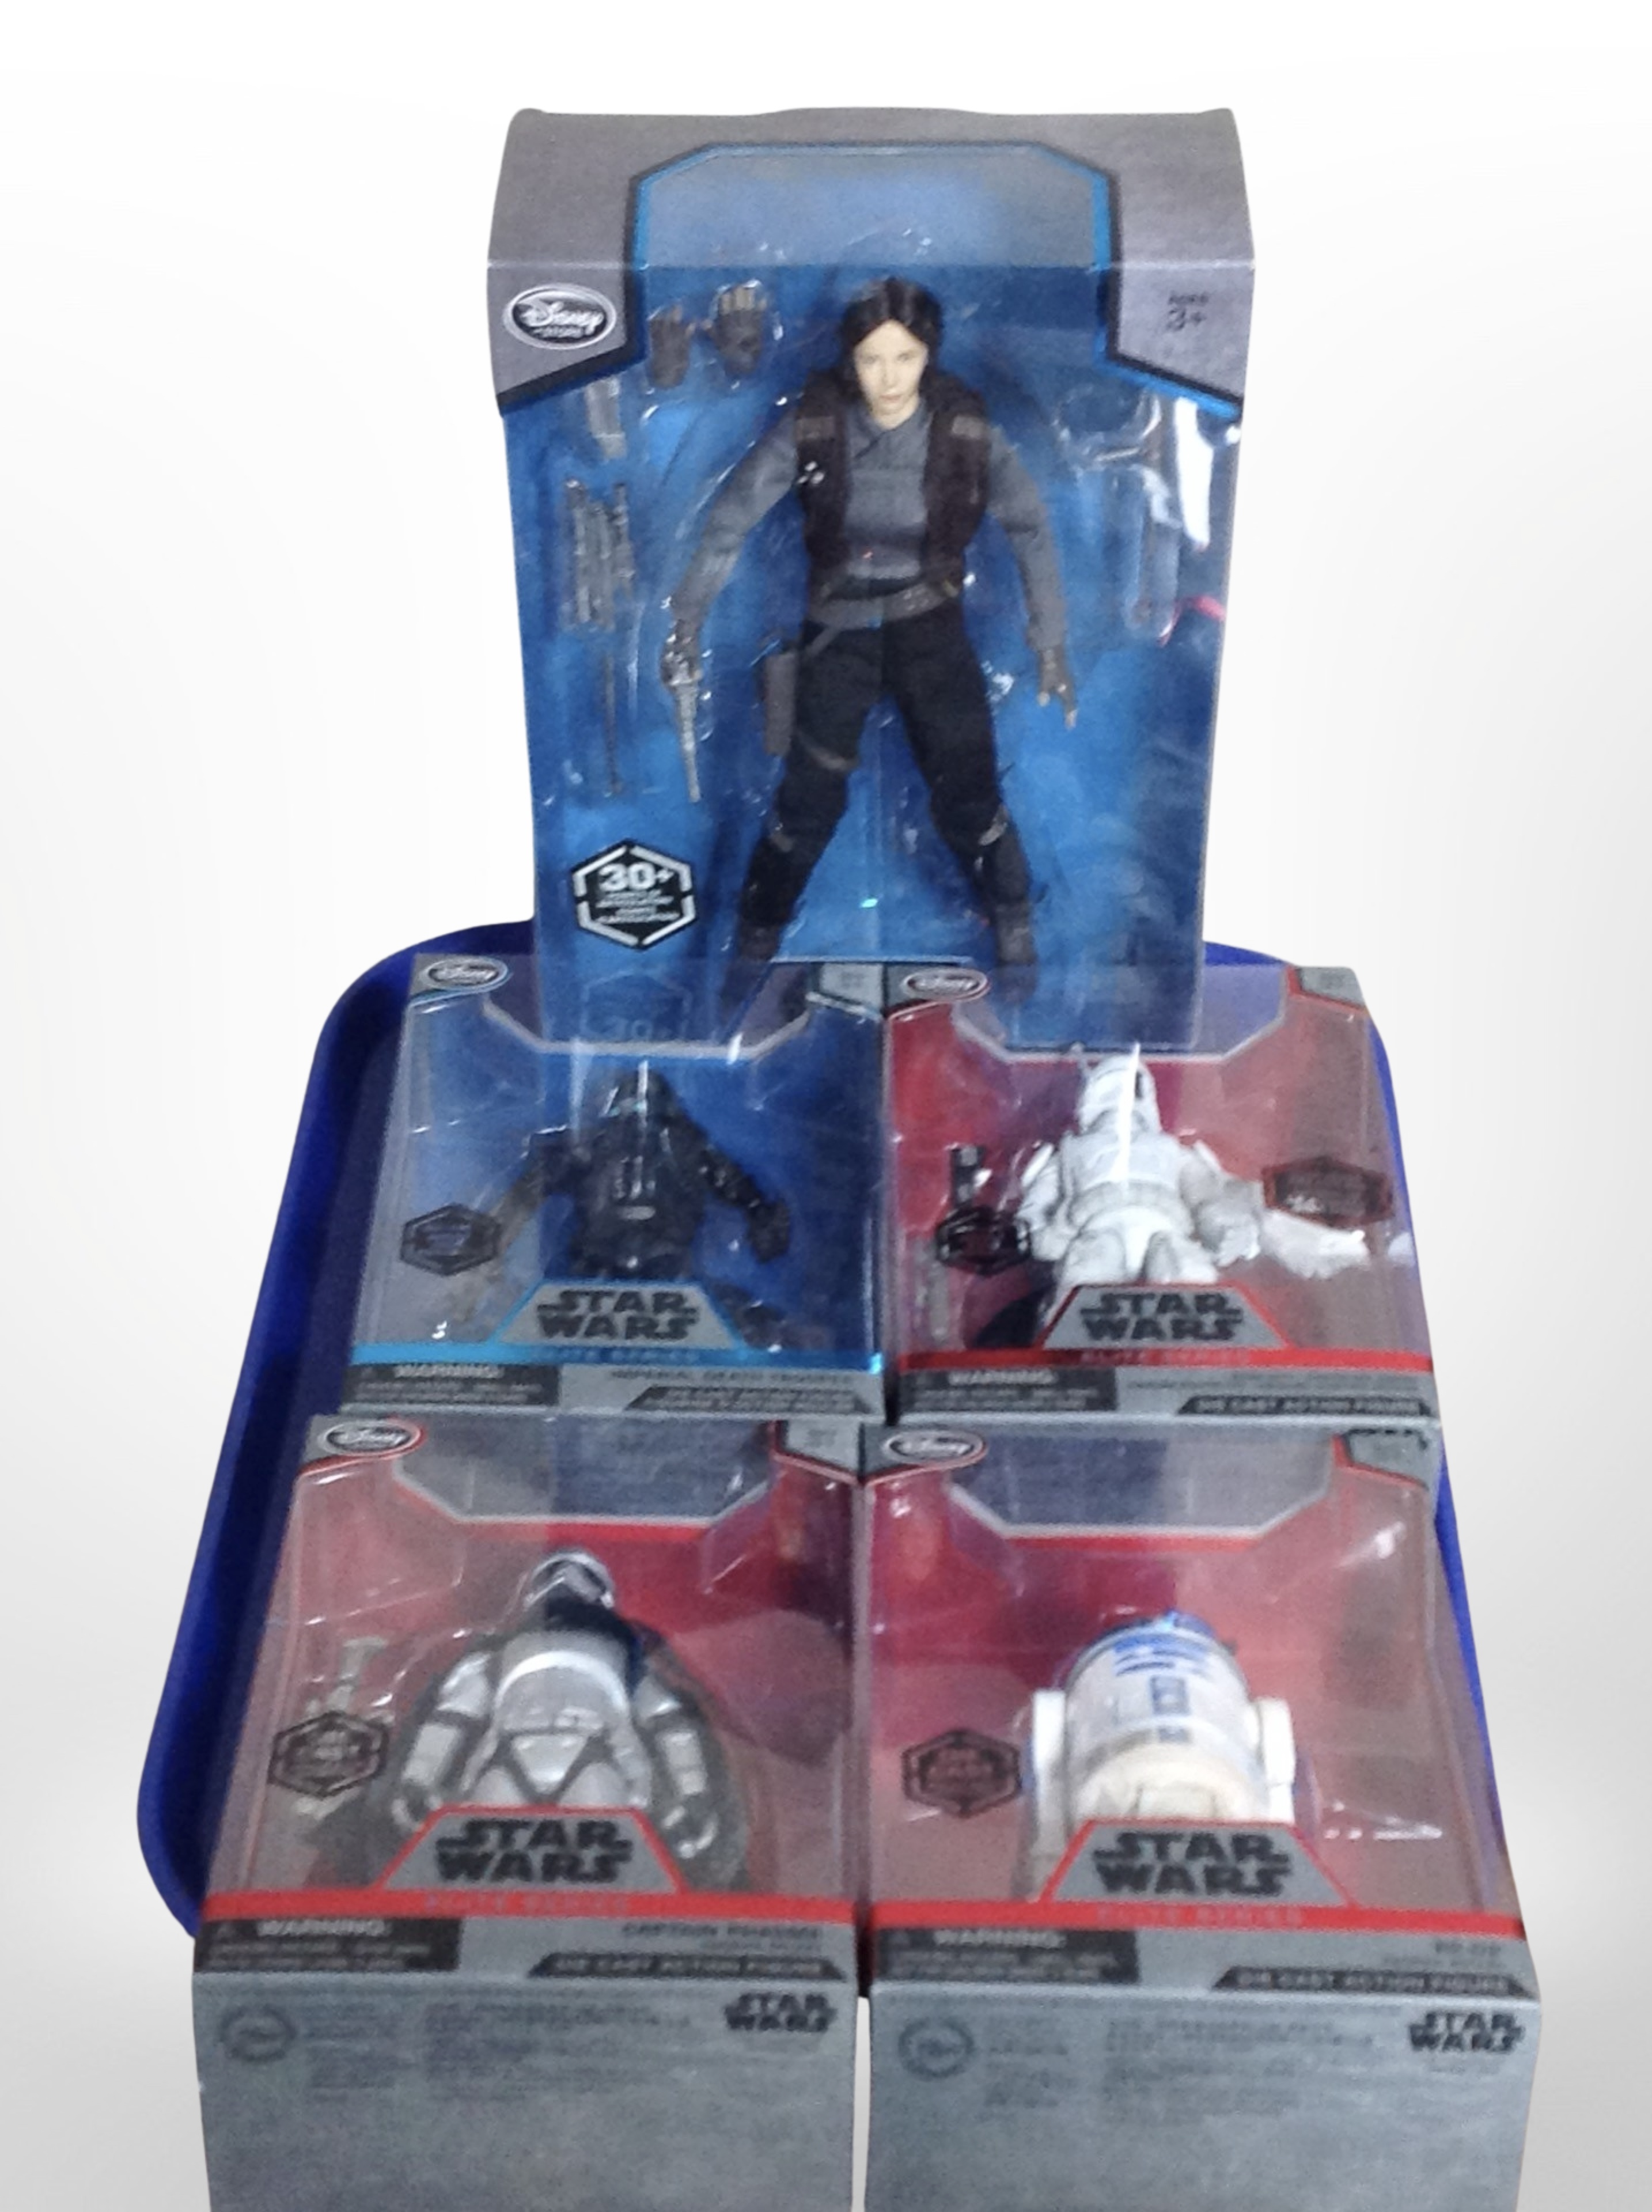 Five Disney Store Star Wars figures, boxed.